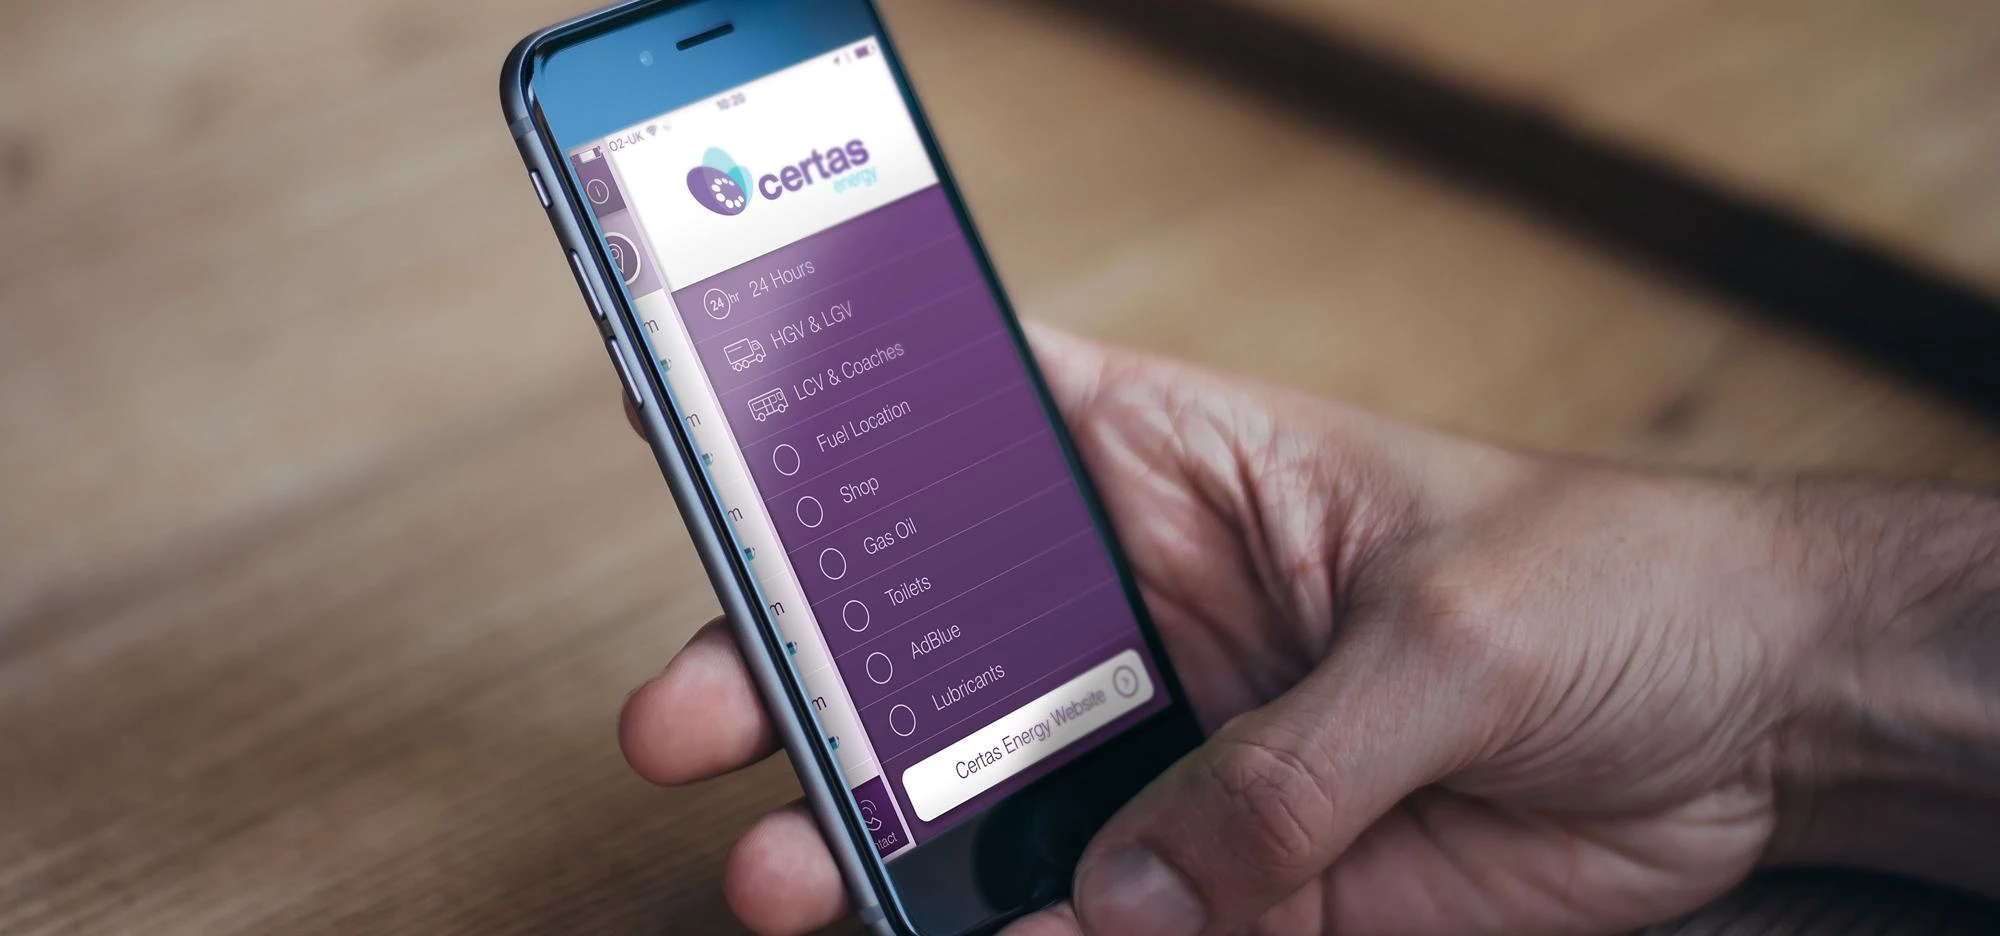 The Certas energy app, part of digital overhaul